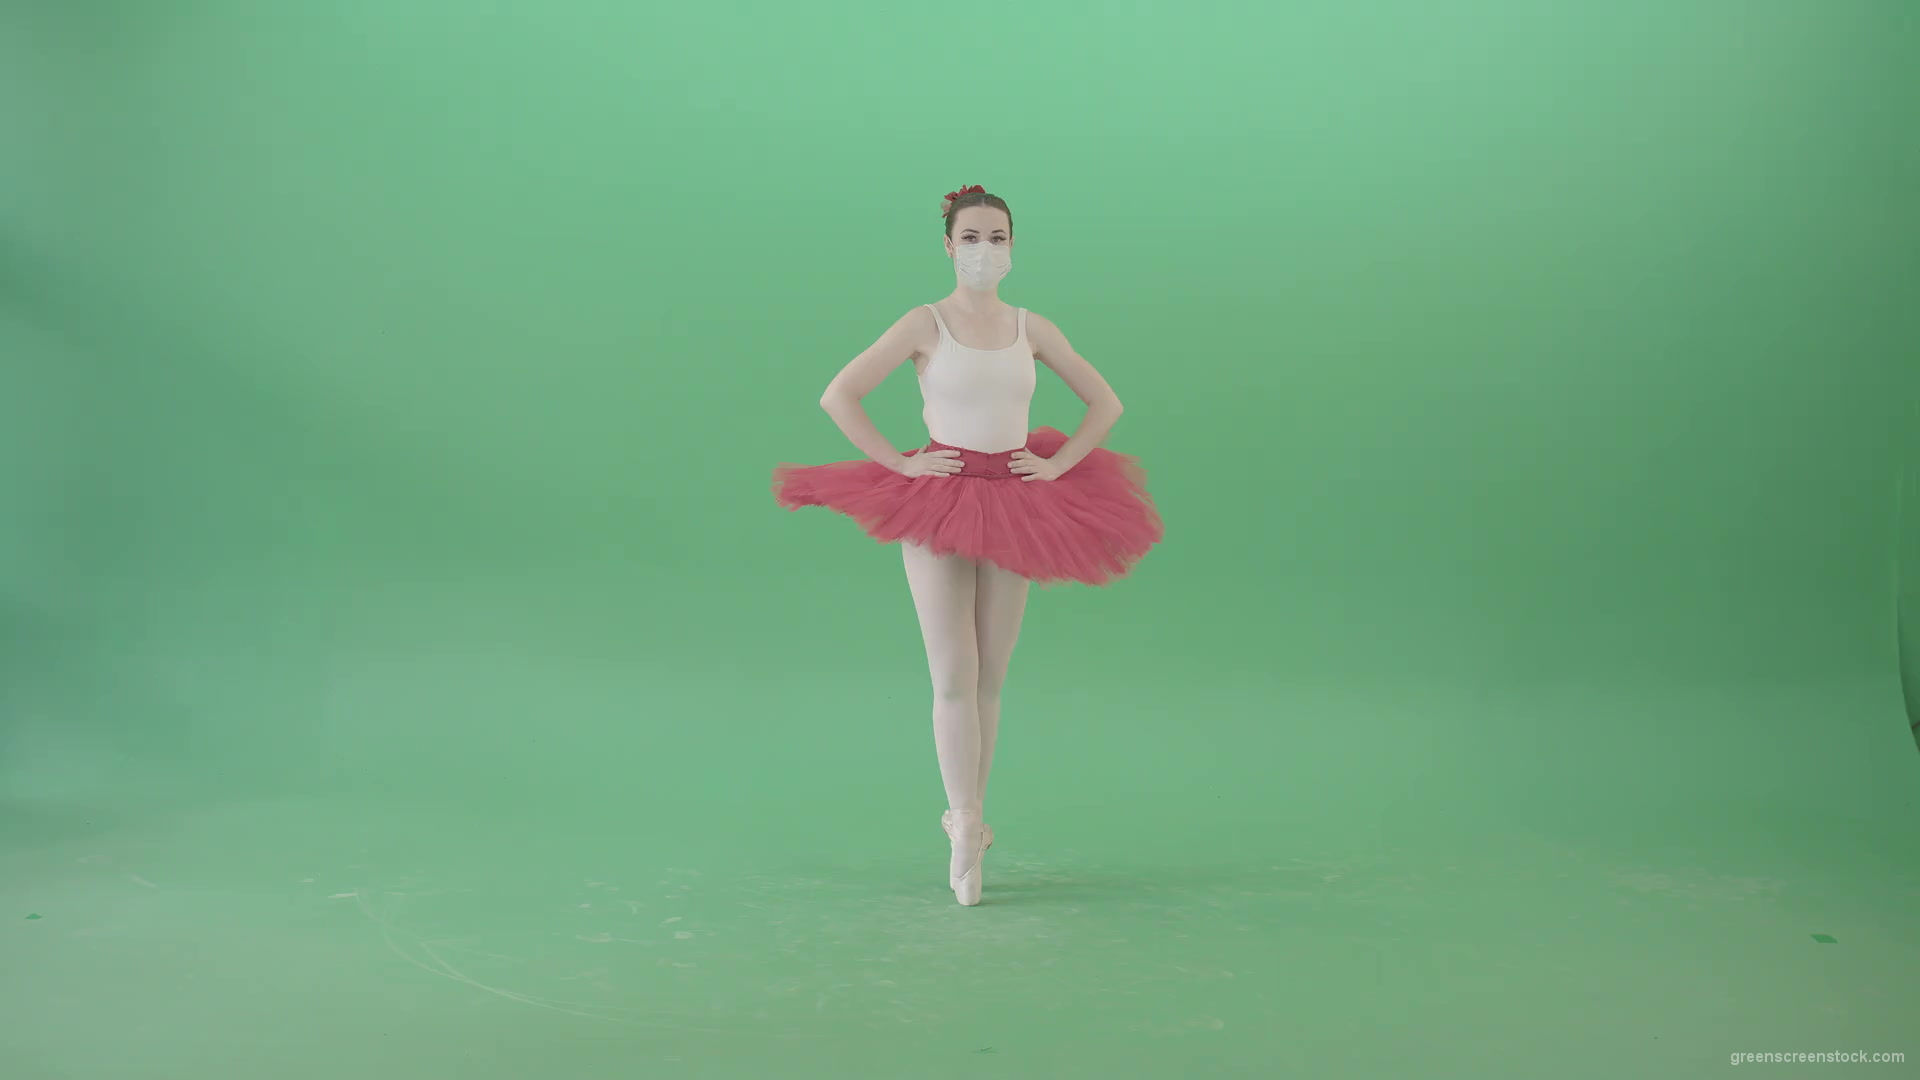 Ballet-Girl-in-Corona-Virus-Mask-Jumping-like-ballerina-isolated-on-green-screen-4K-Video-Footage-1920_001 Green Screen Stock